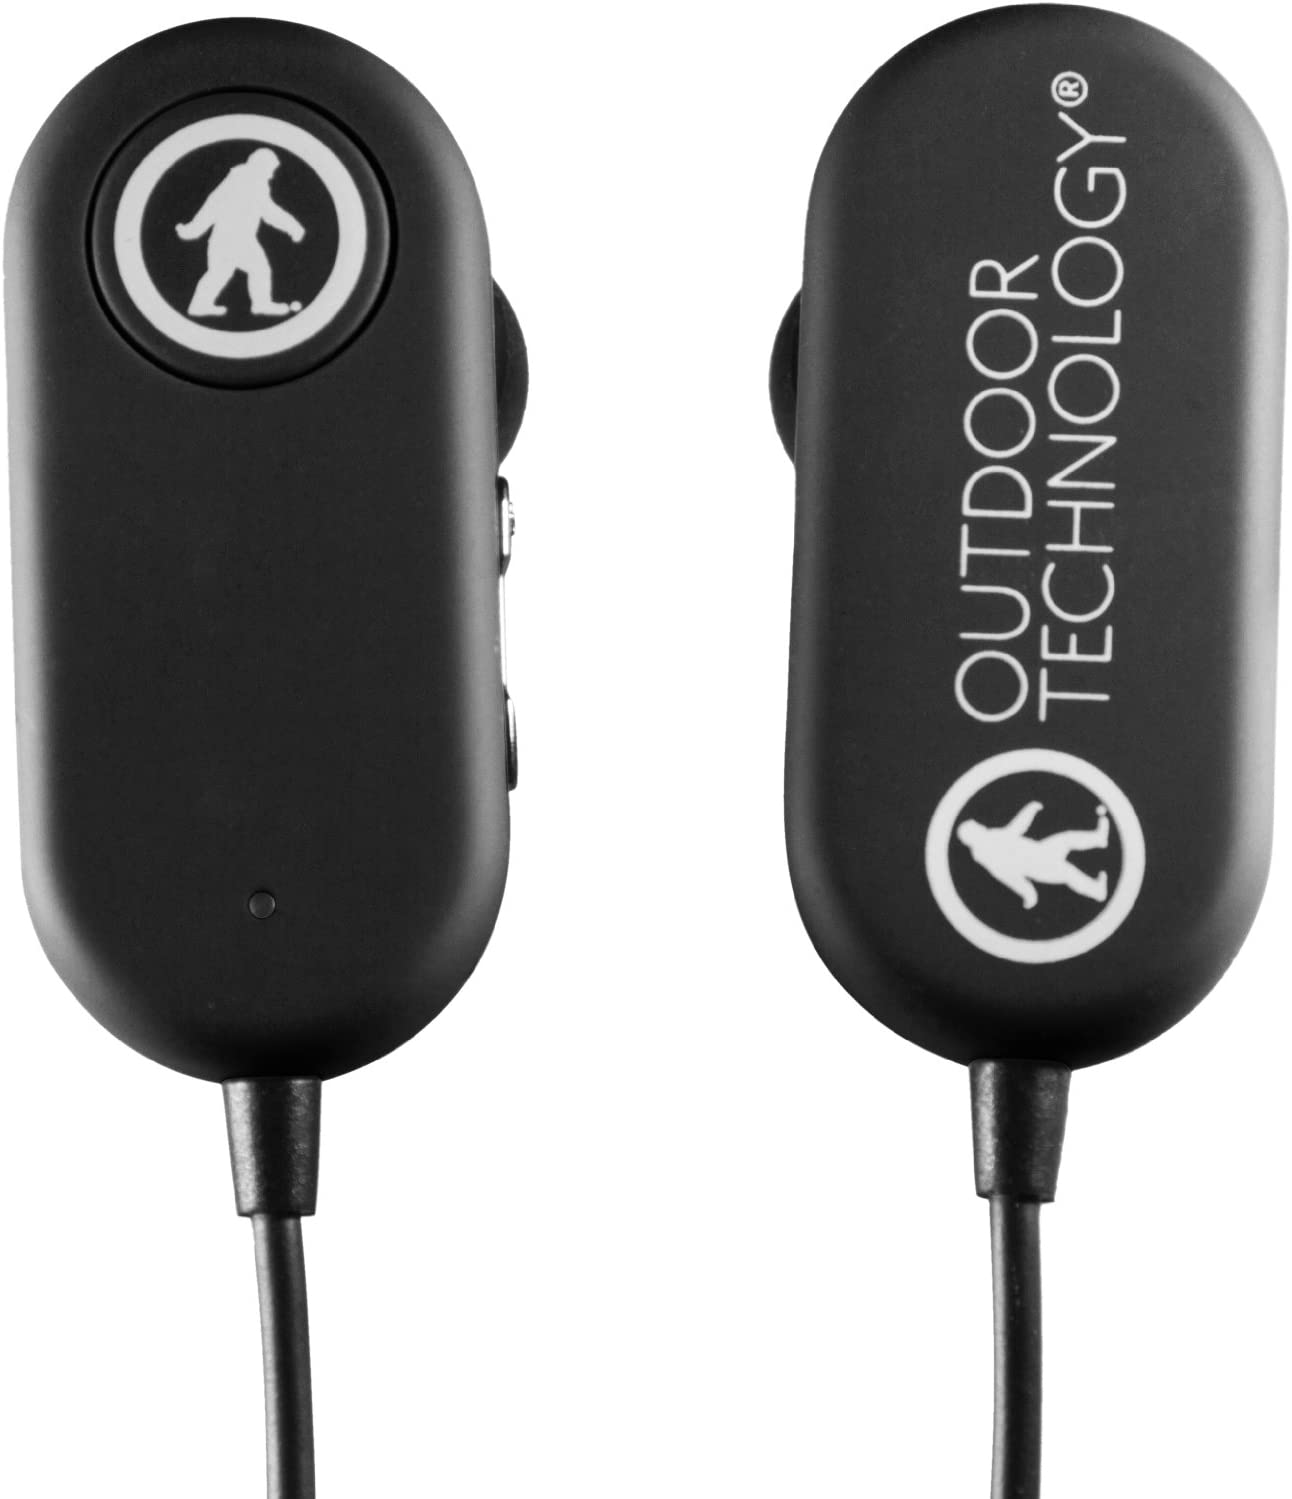 Outdoor Tech Tags Wireless Earbuds - Black